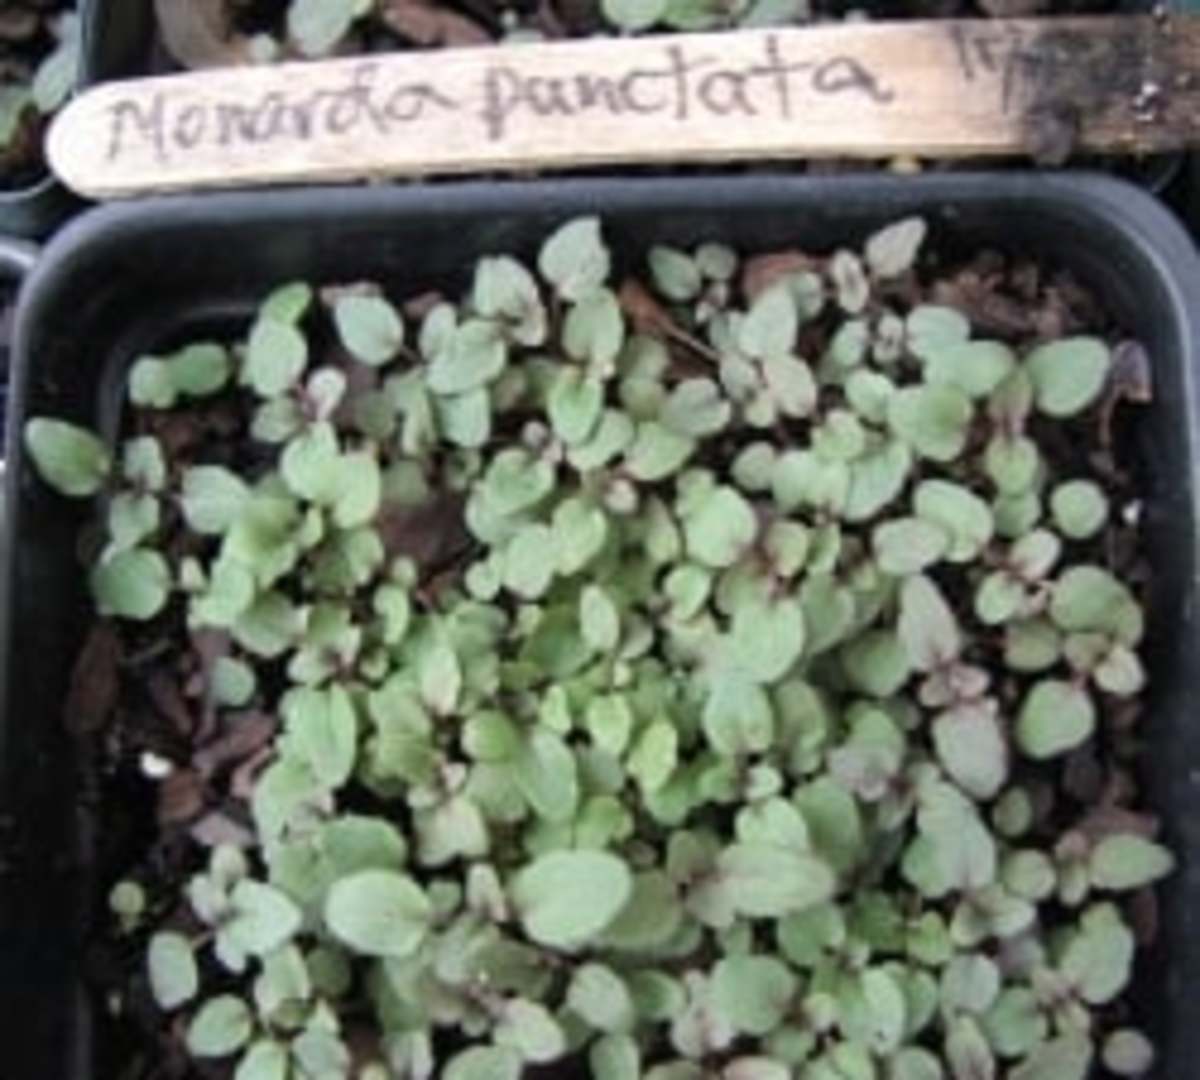 Tiny seedlings of spotted horsemint, Monarda punctata.